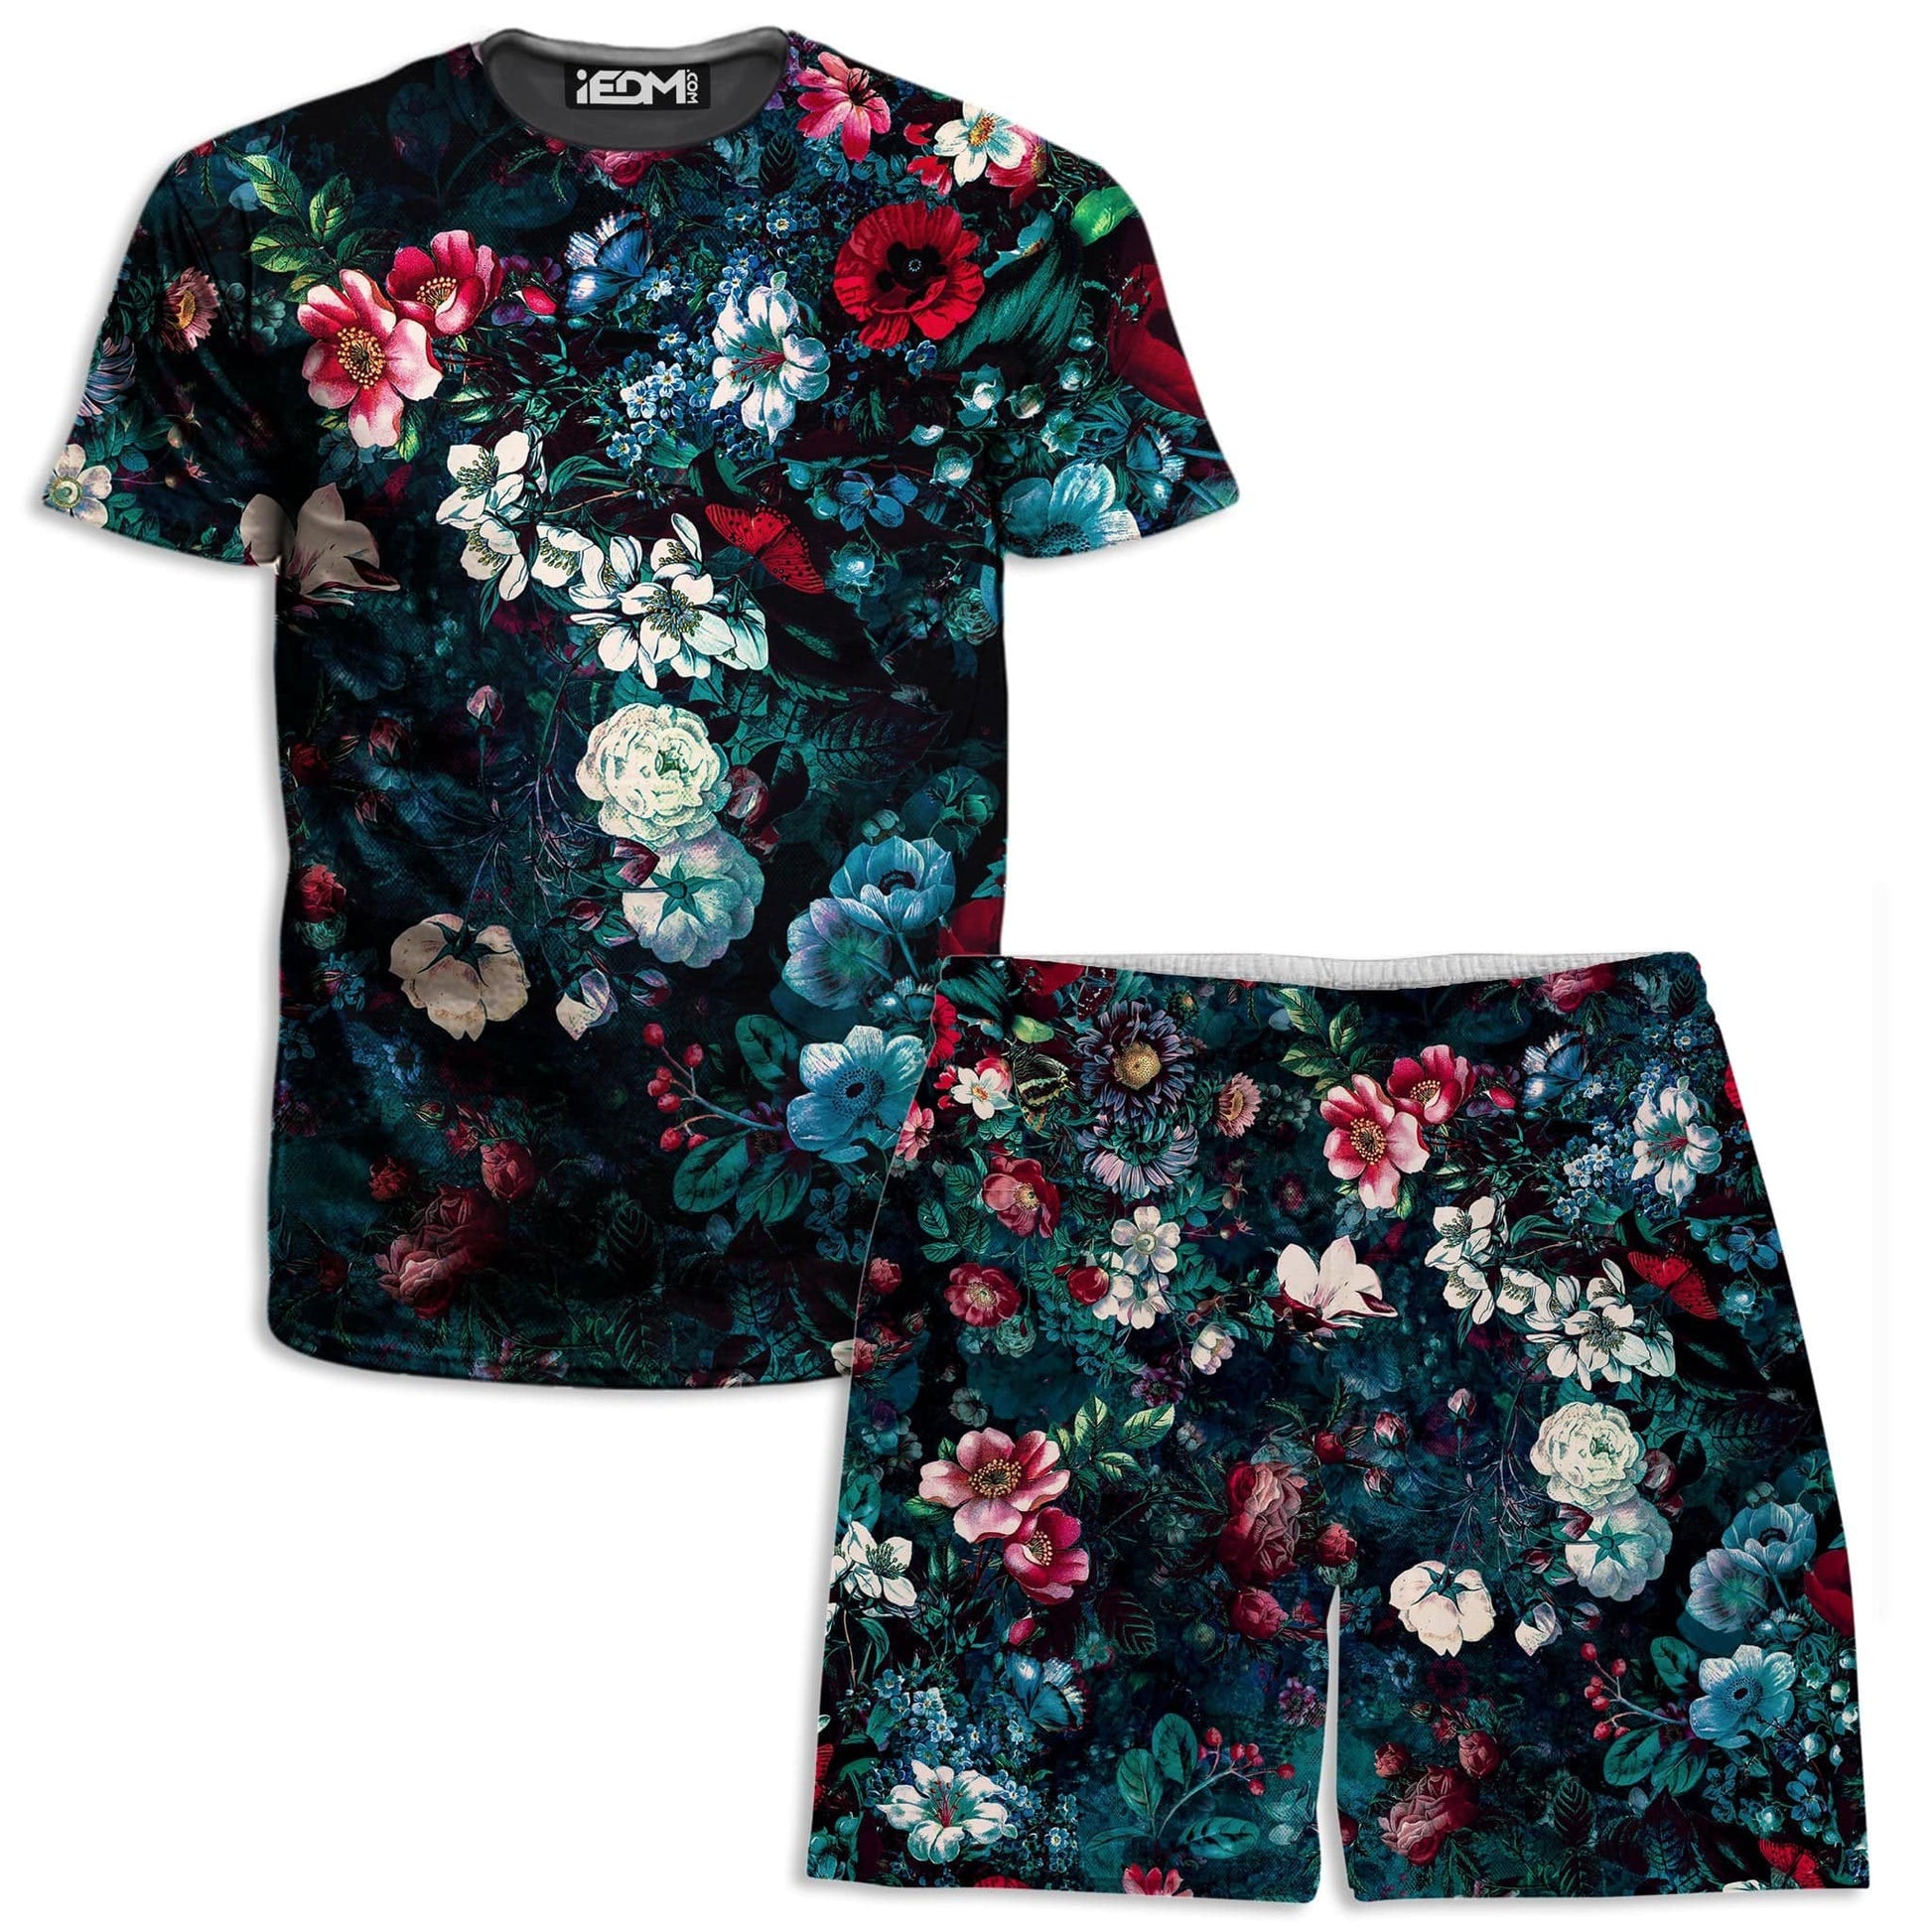 Neon Land T-Shirt and Shorts Combo, Riza Peker, | iEDM